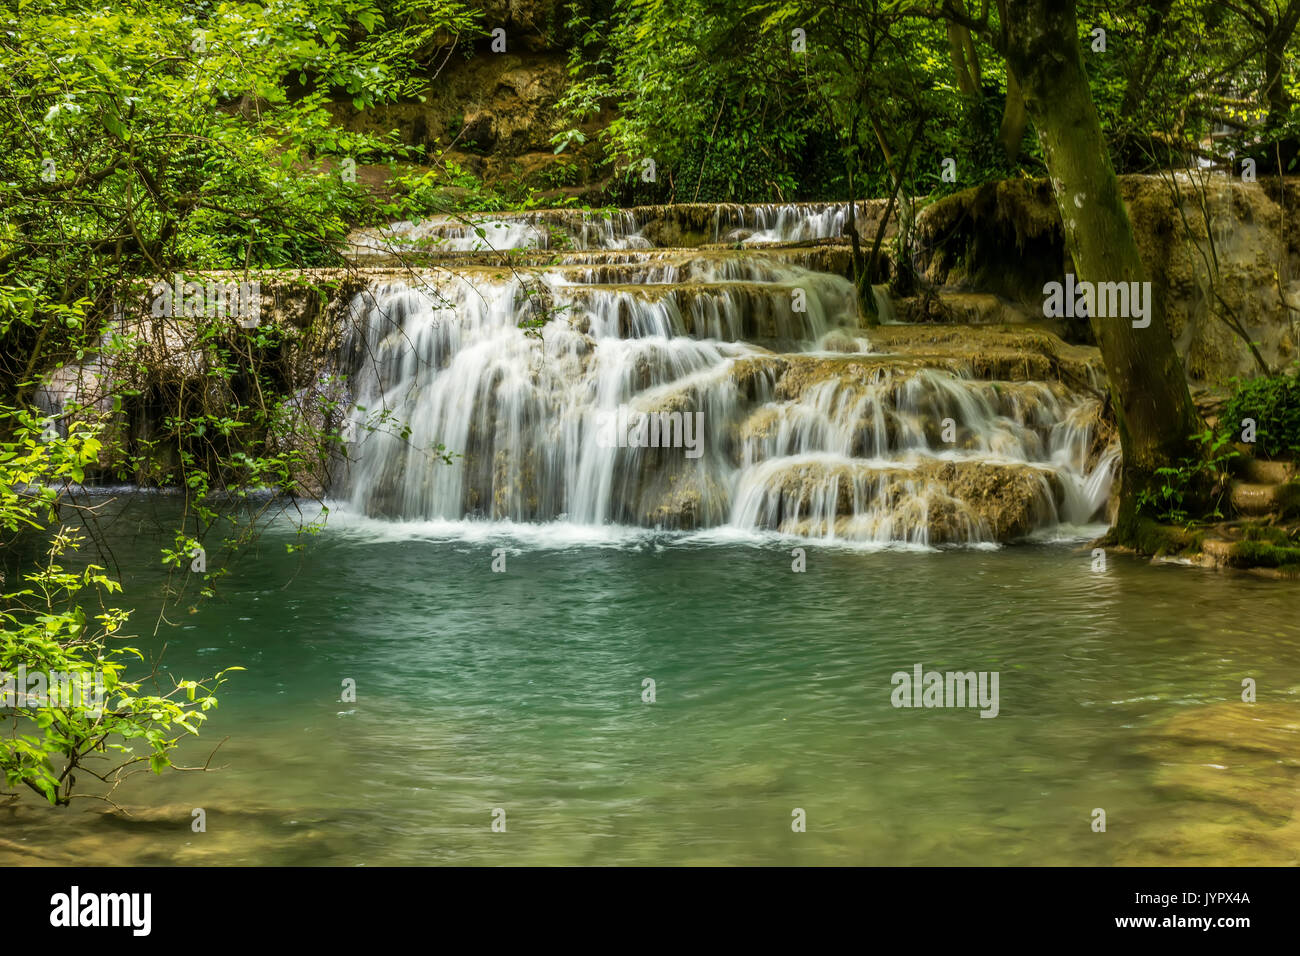 Krushunski waterfall, situated in Bulgaria, Europe Stock Photo